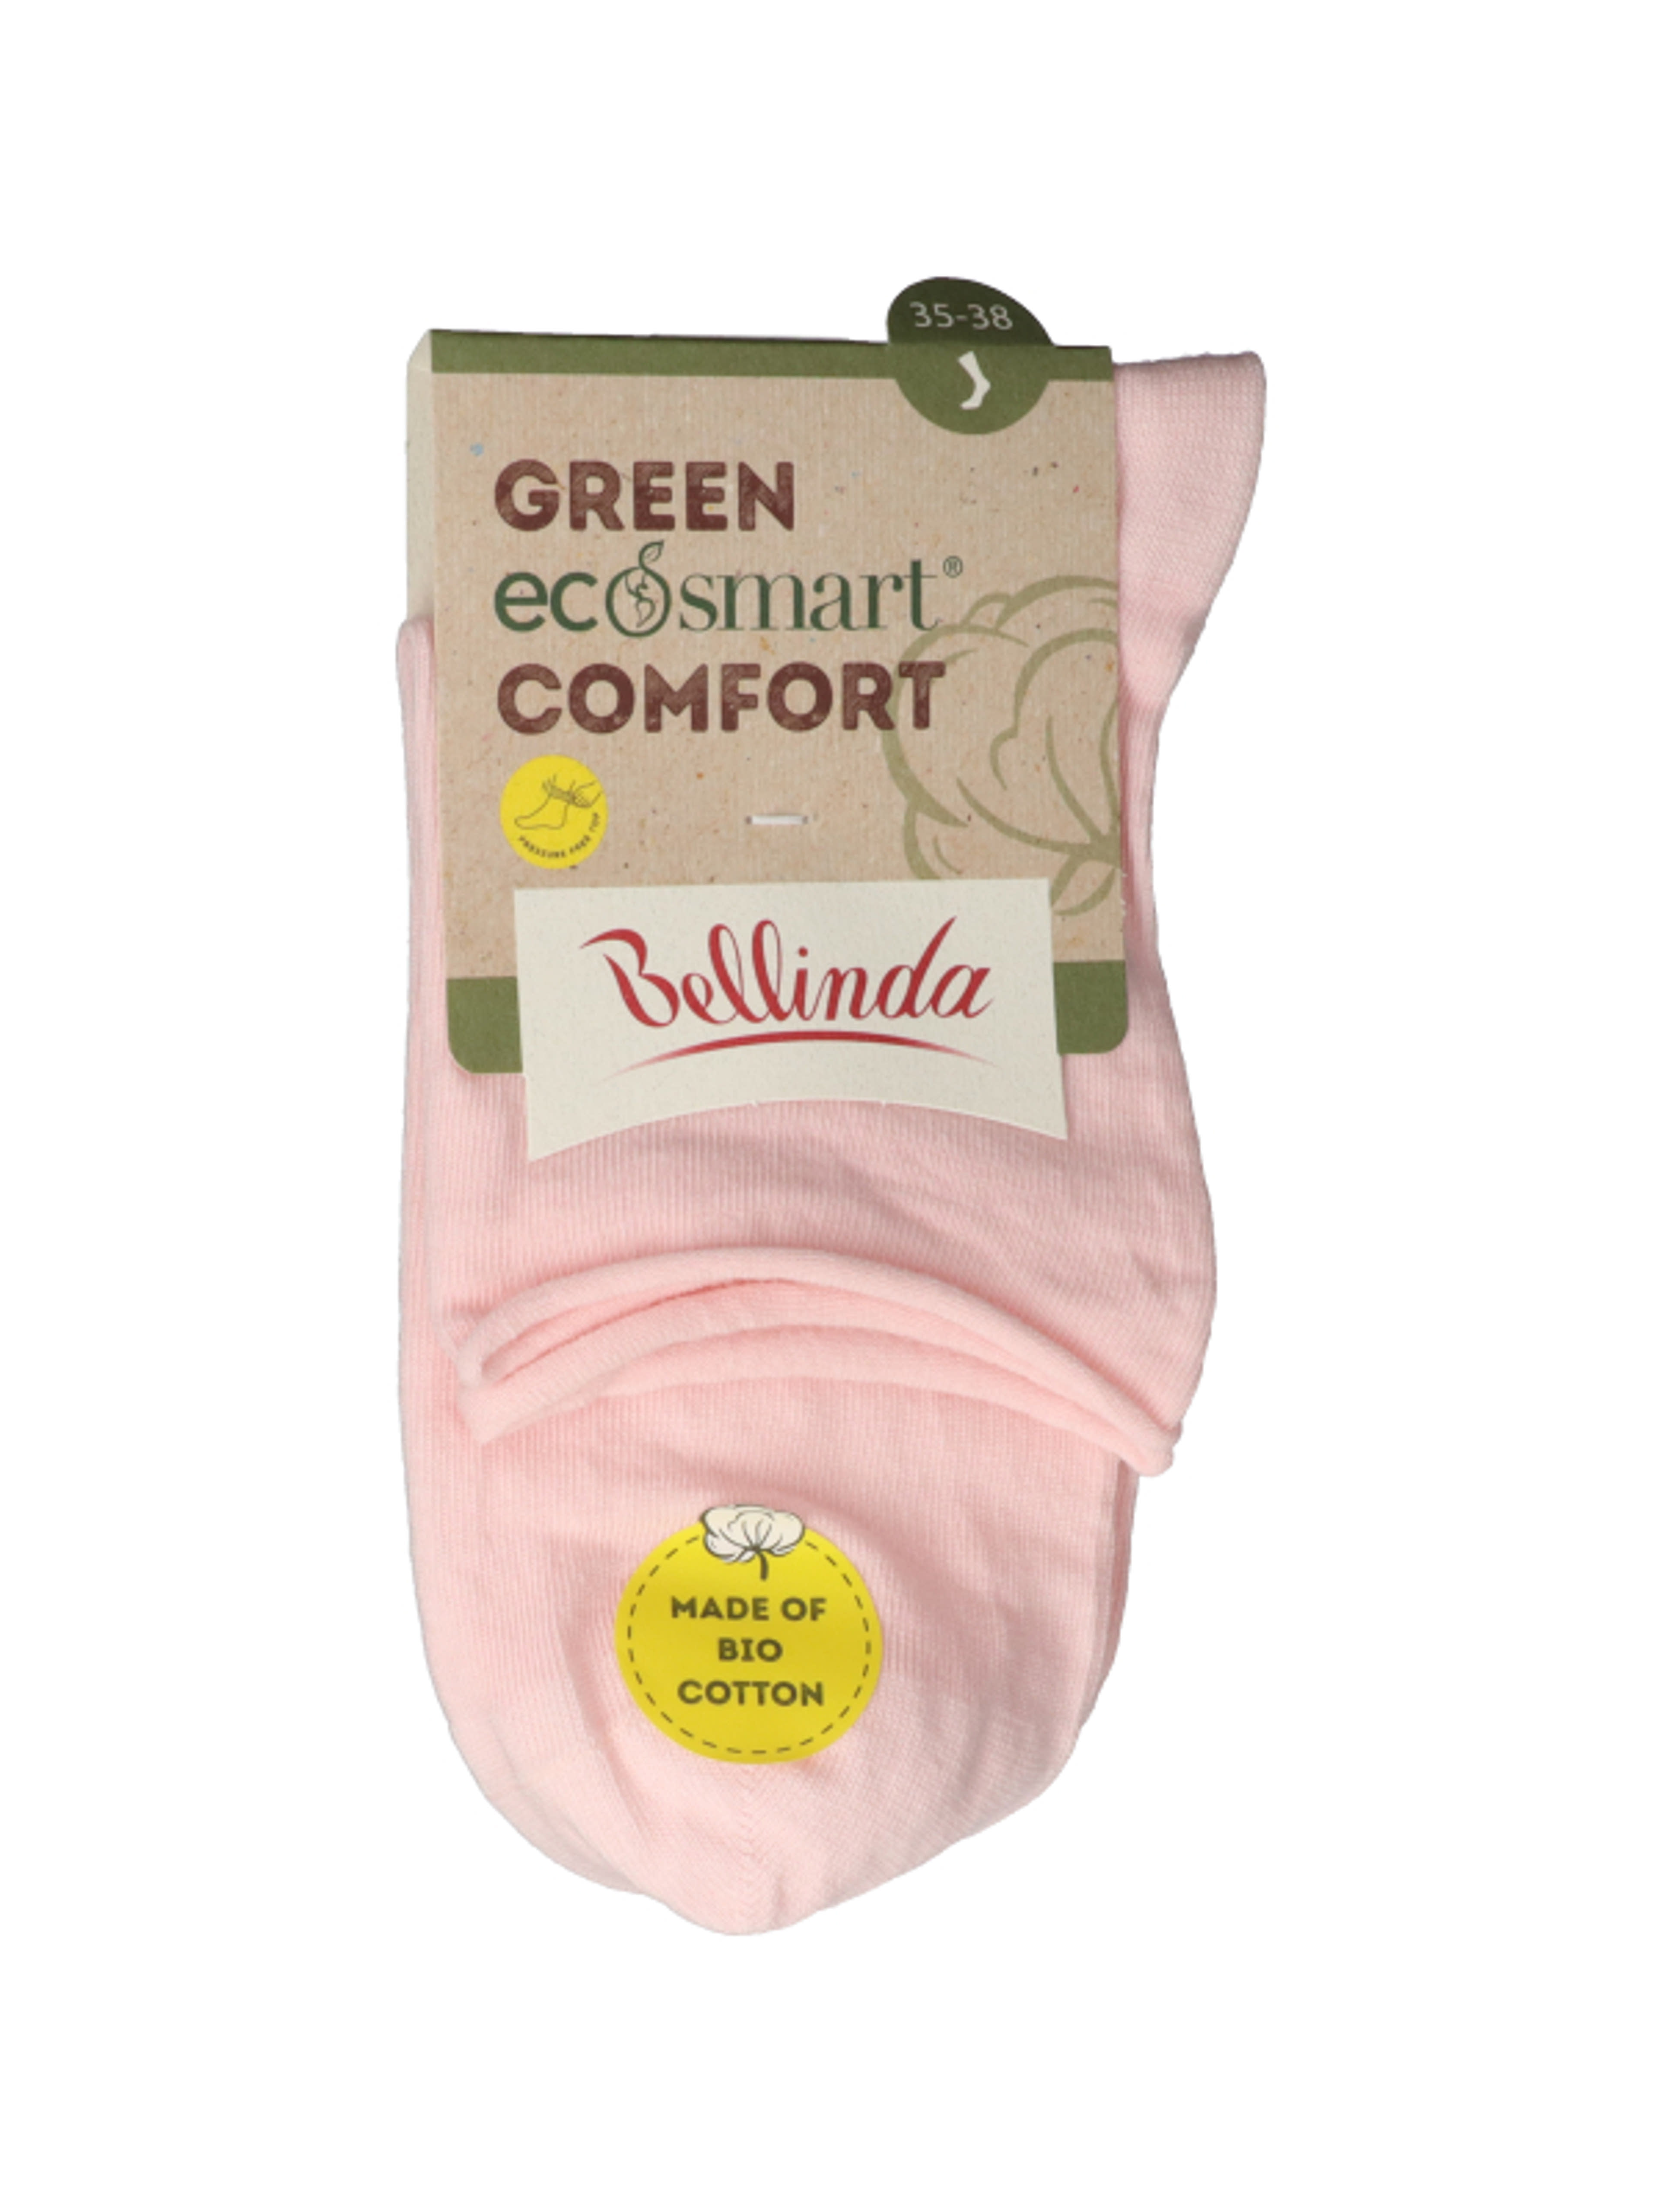 Bellinda Green Ecosmart zokni, pink 35-38 - 1 db-1